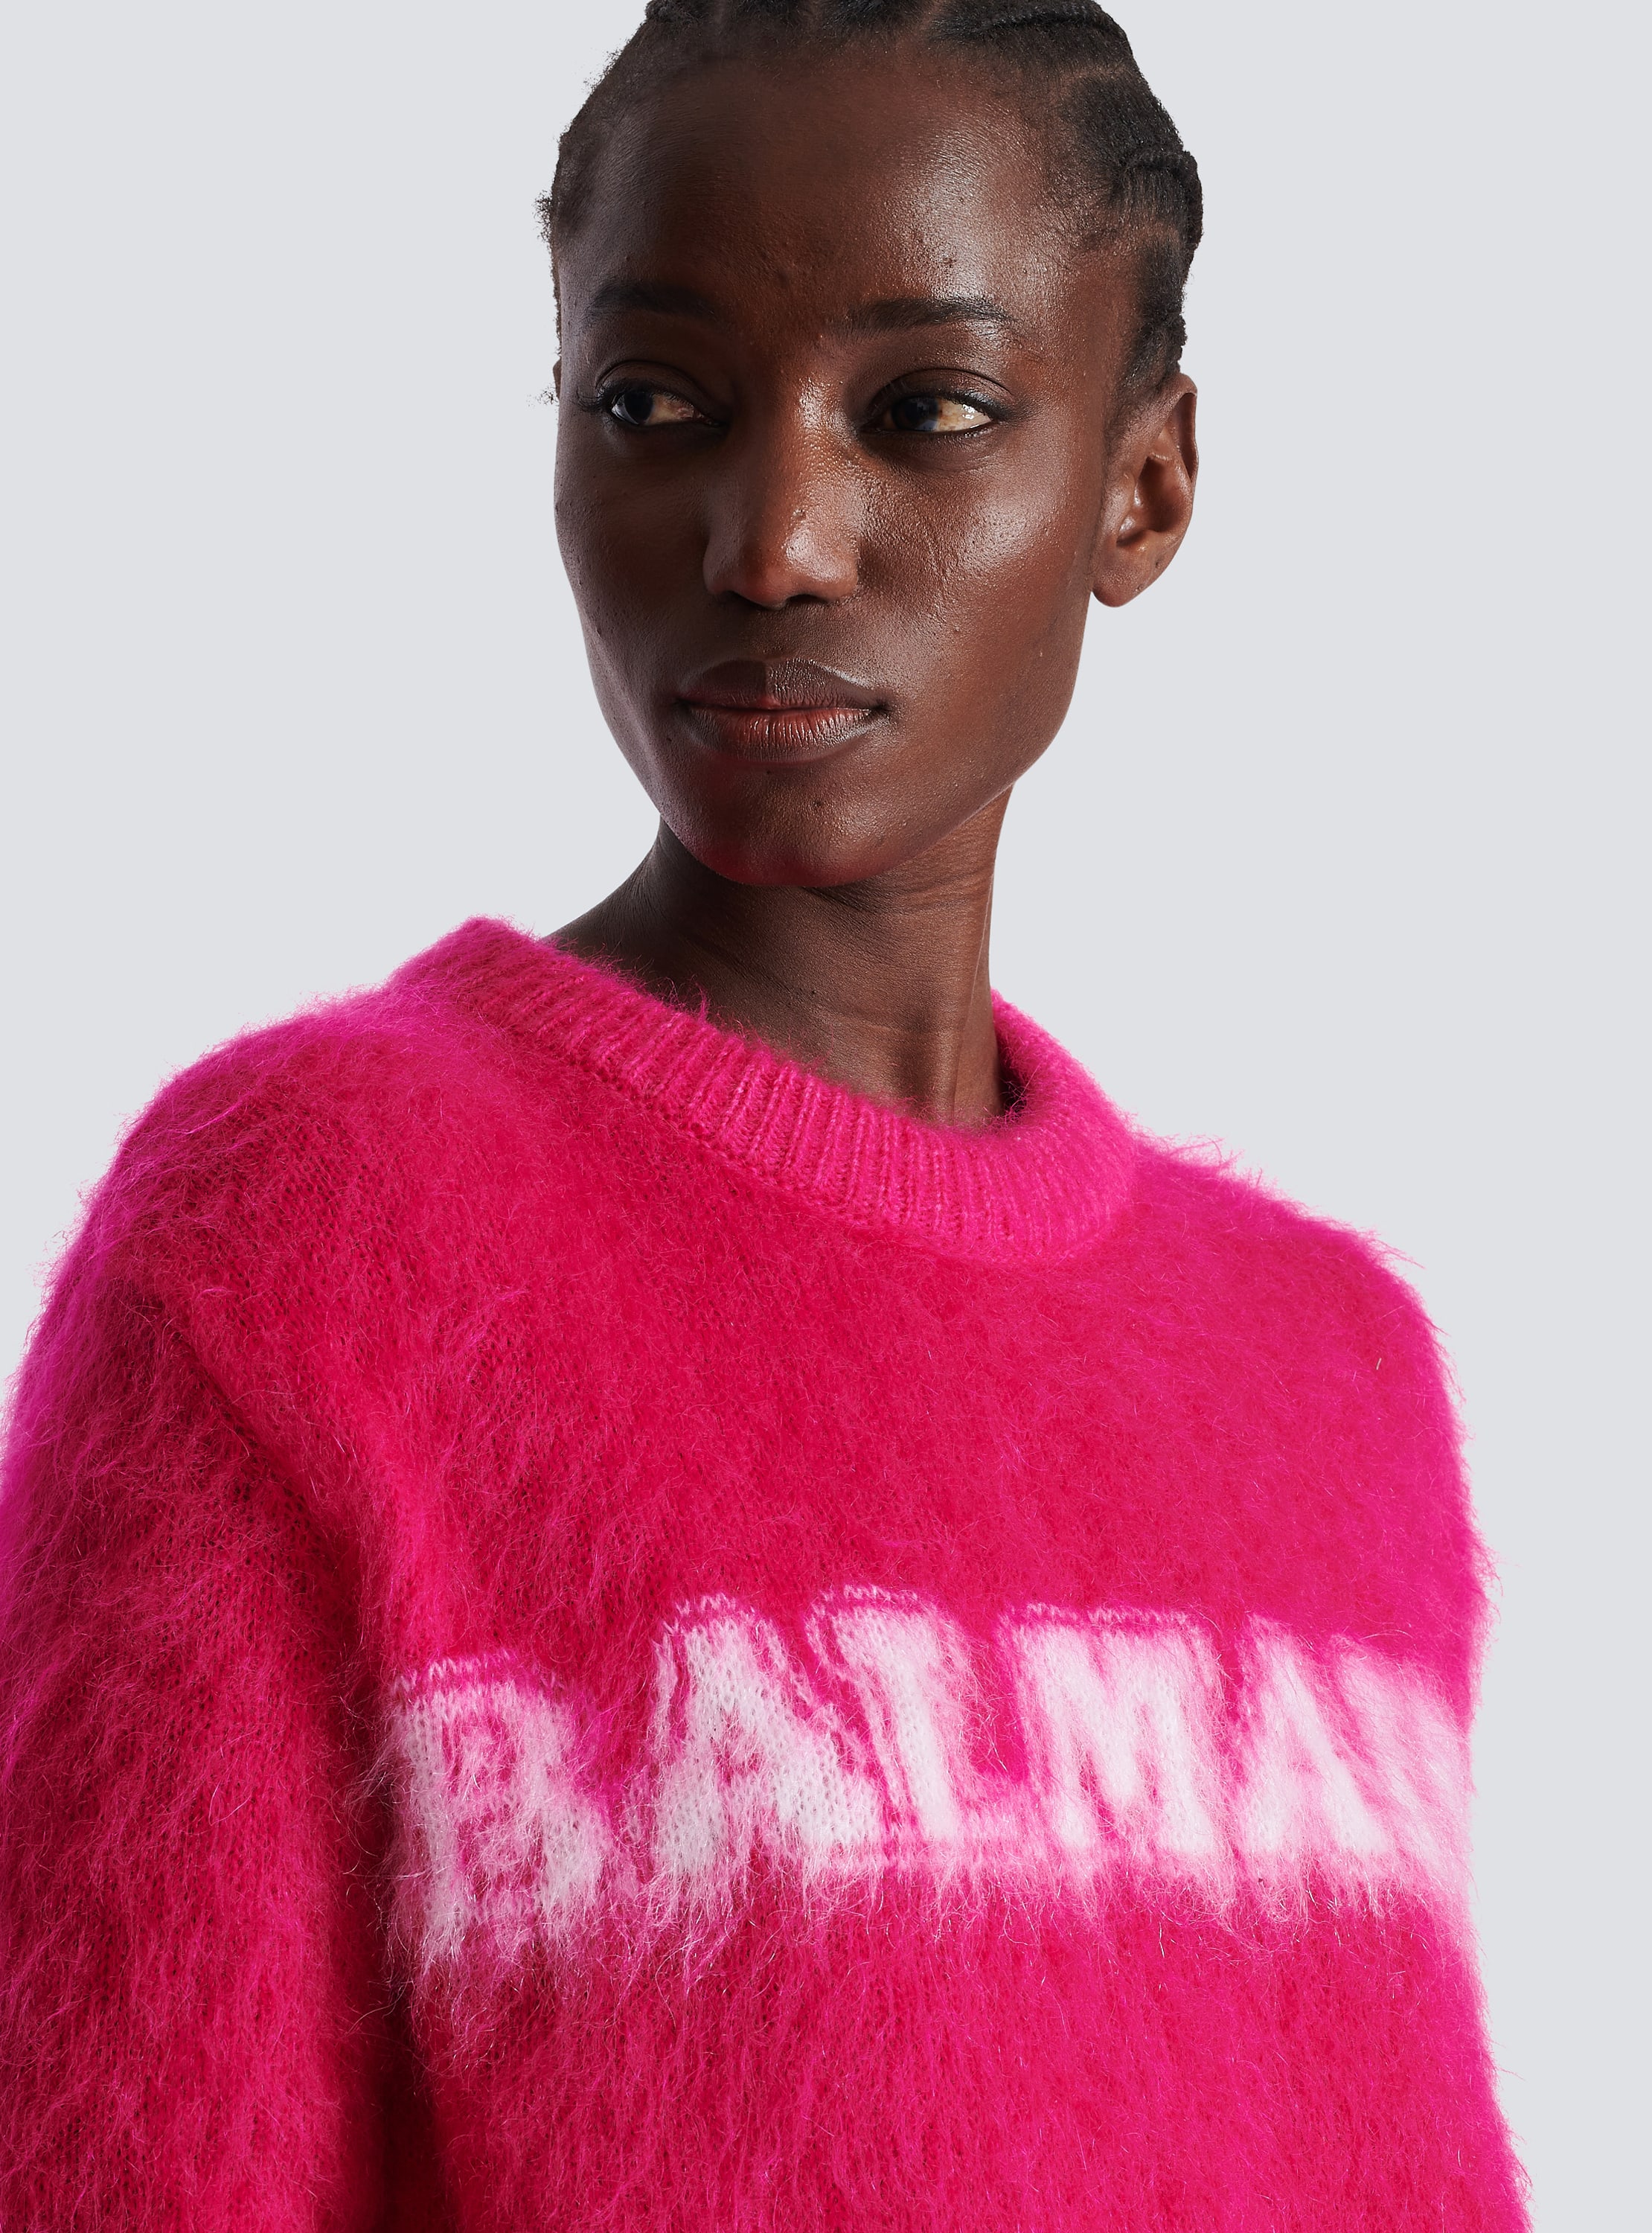 Balmain Wool Sweater with Jacquard Pattern